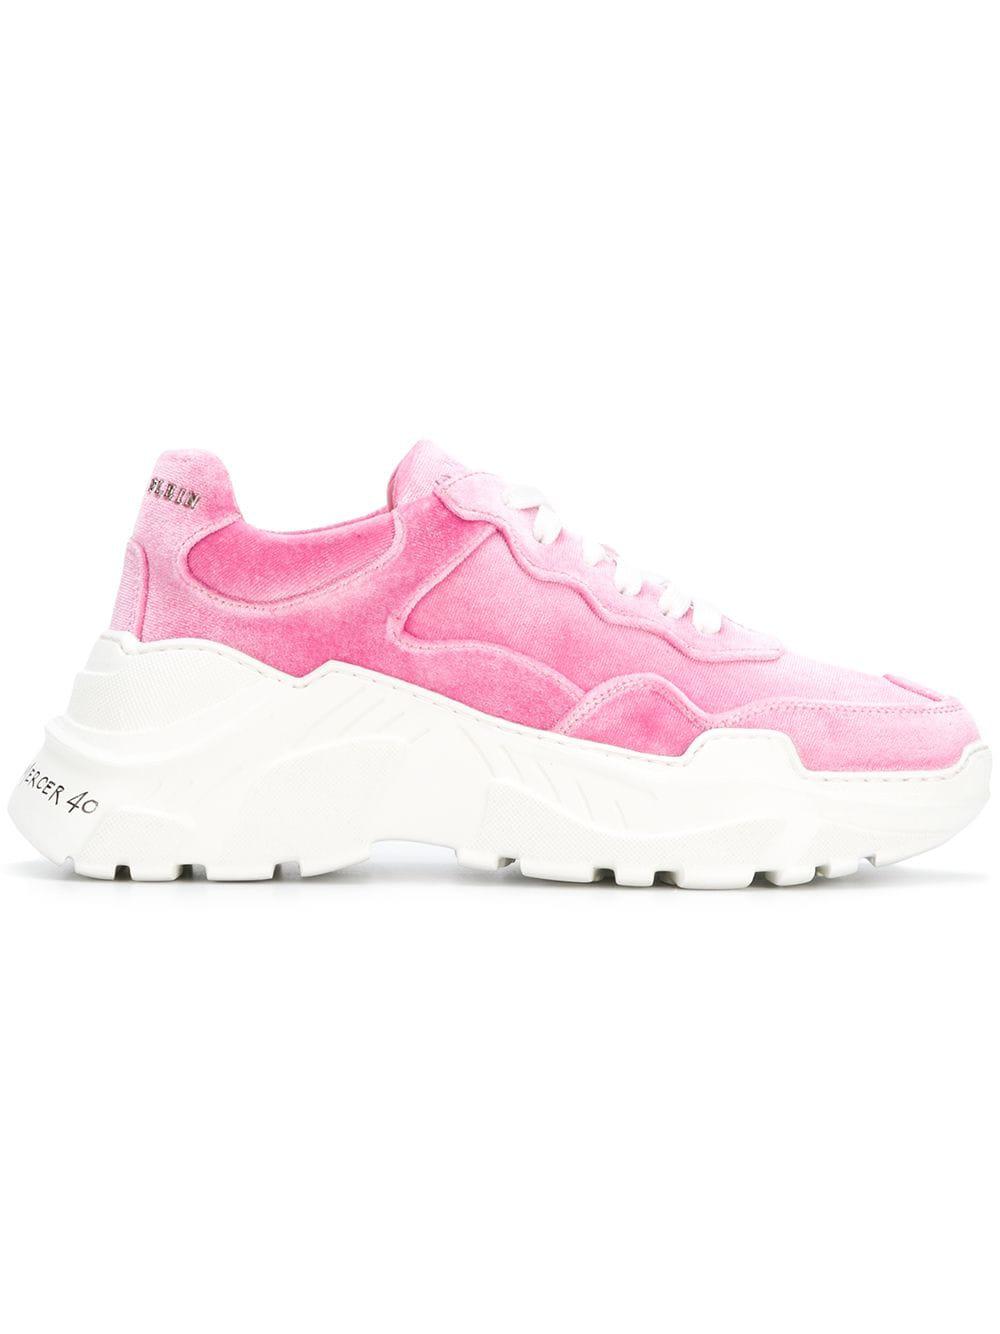 philipp plein pink sneakers